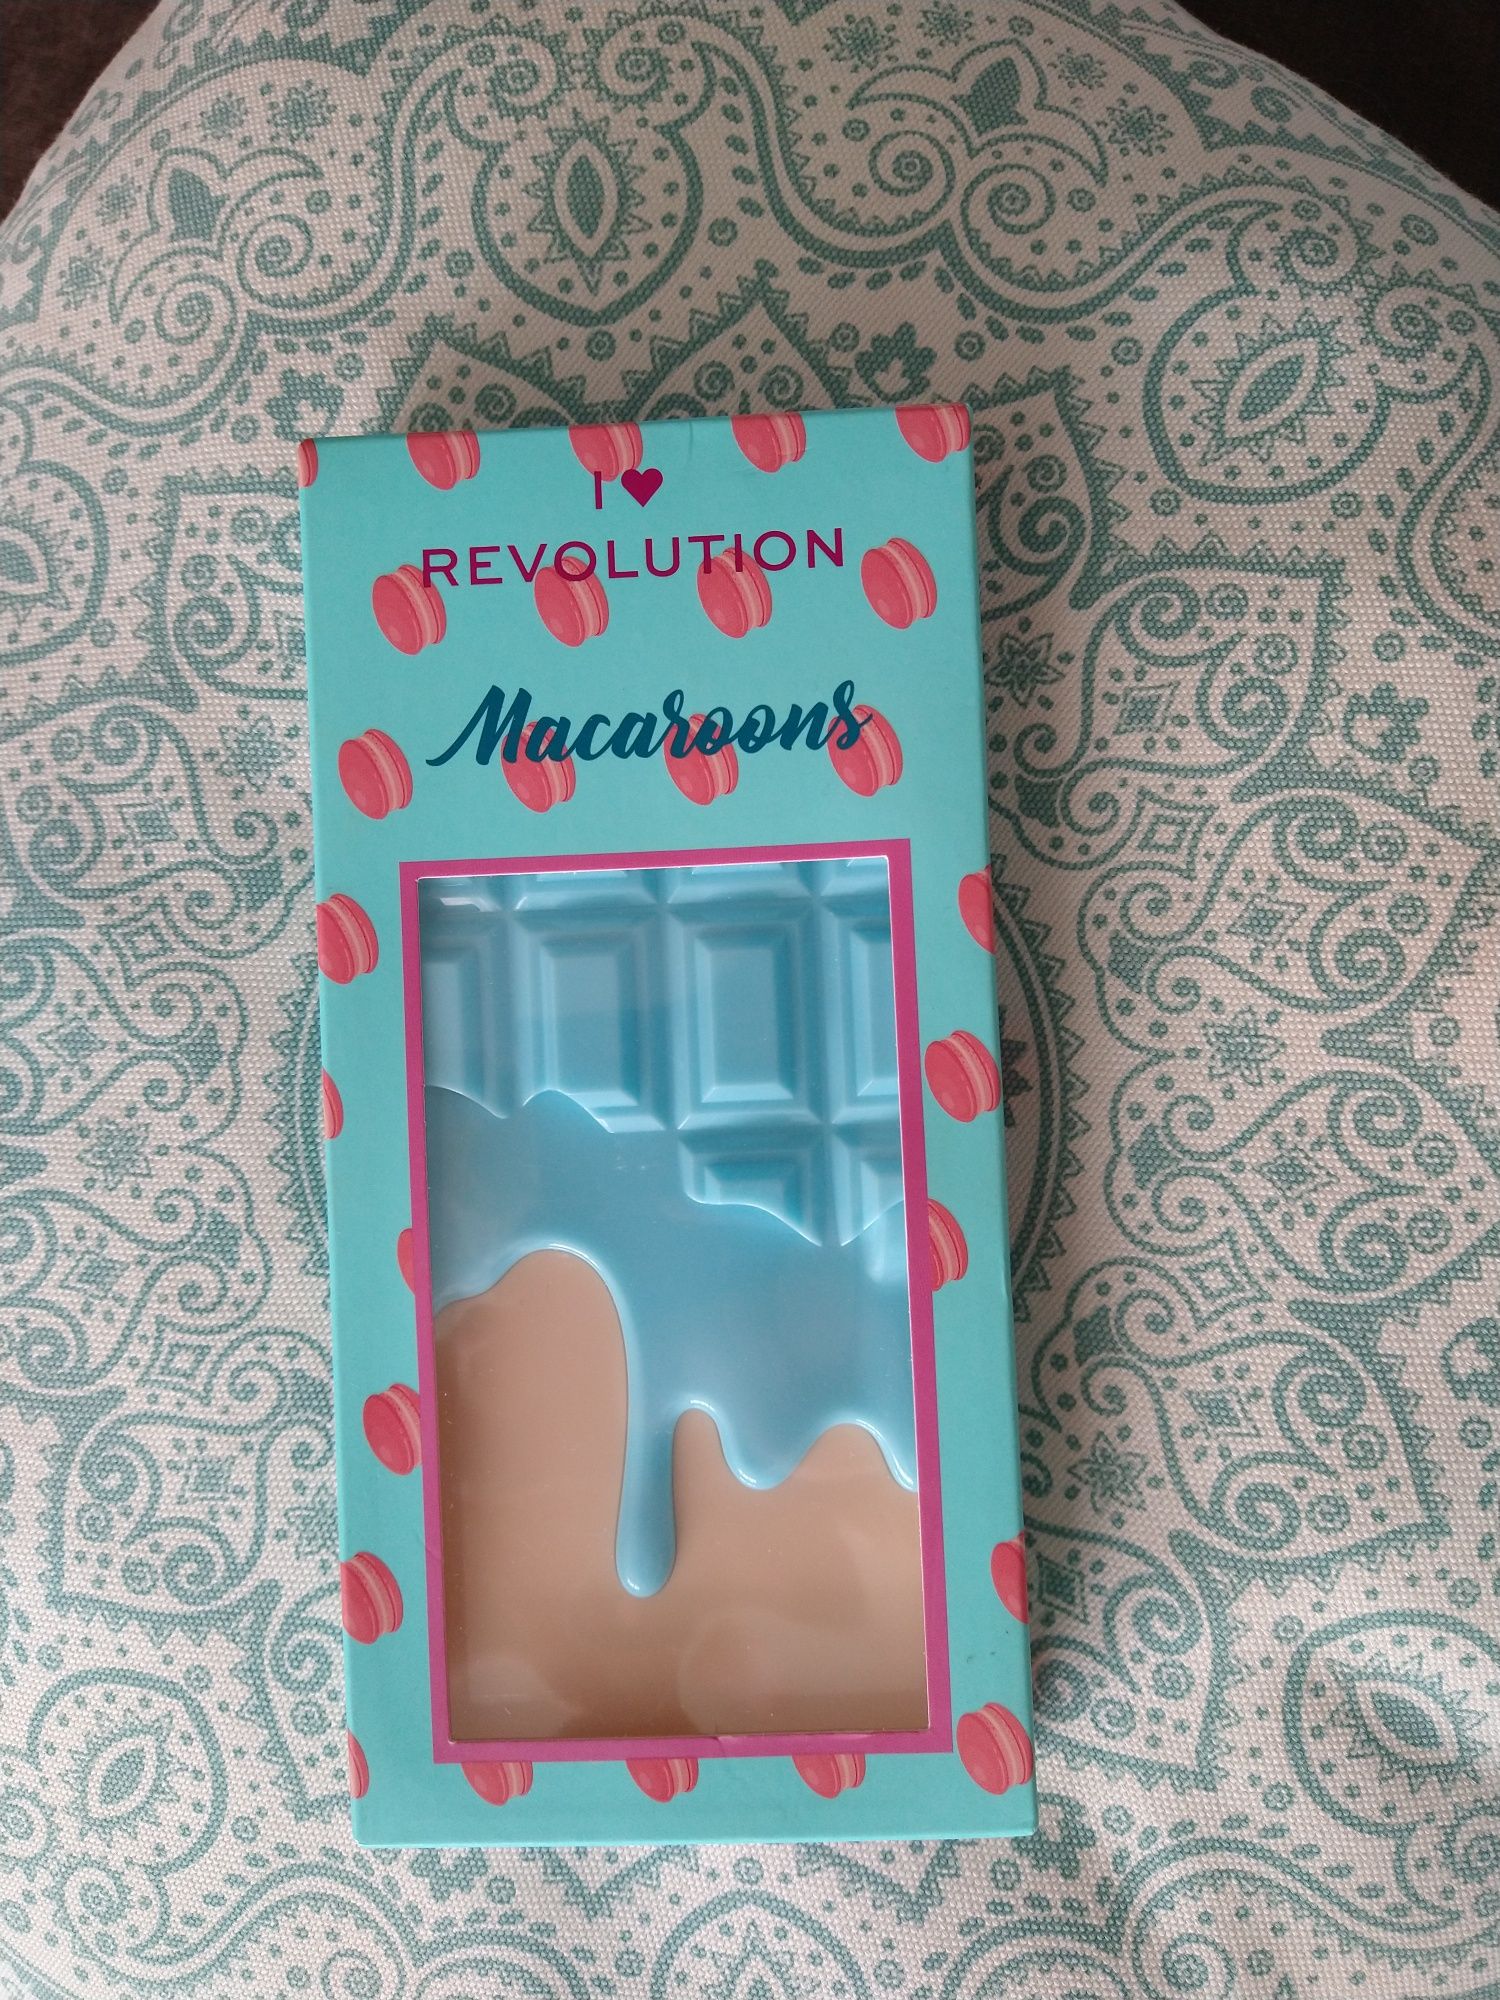 I love REVOLUTION Macaroons Chocolate